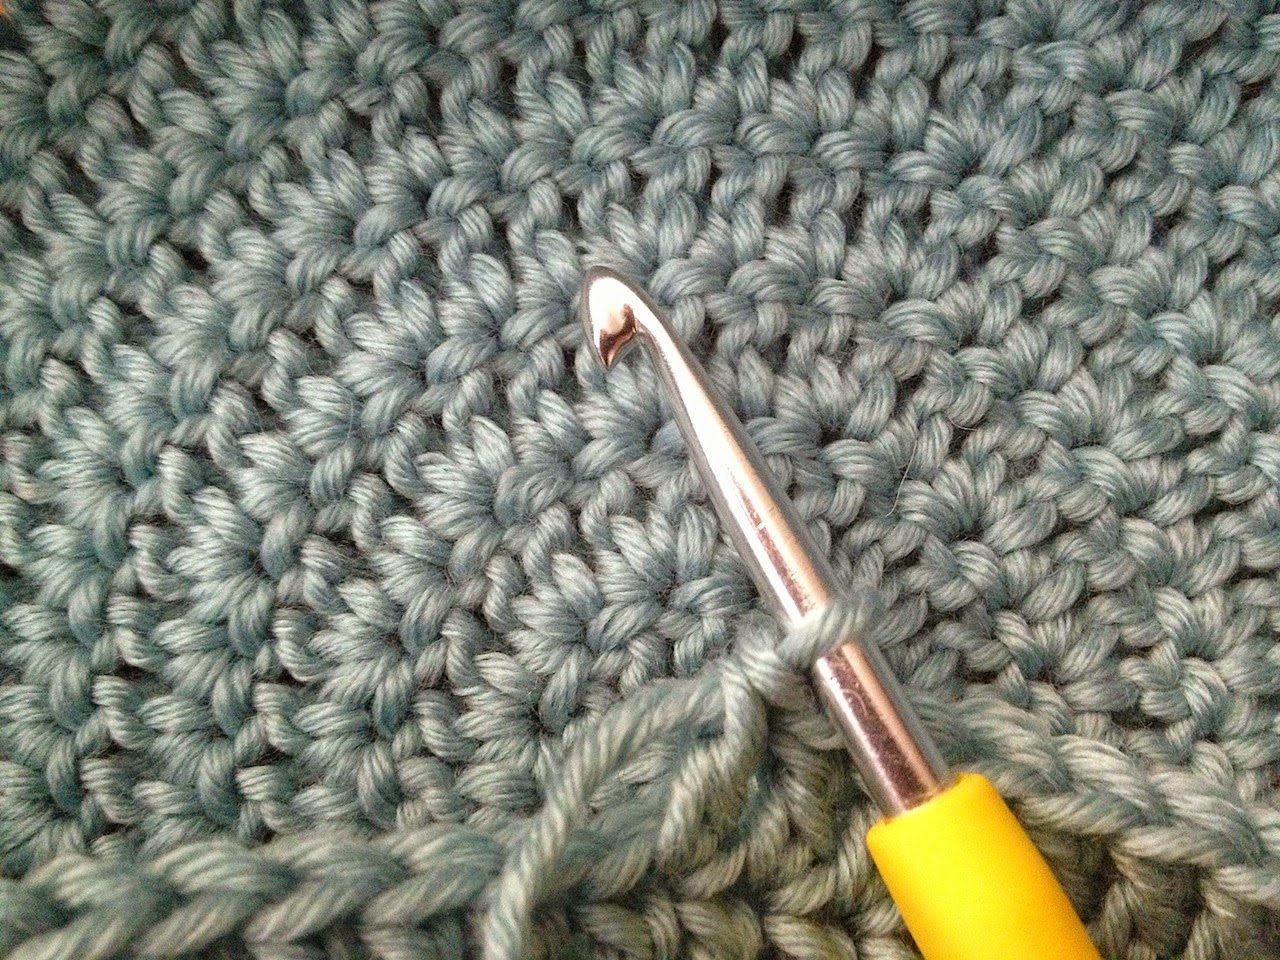 Illuminate Crochet: Inline and Non-Inline Crochet Hooks